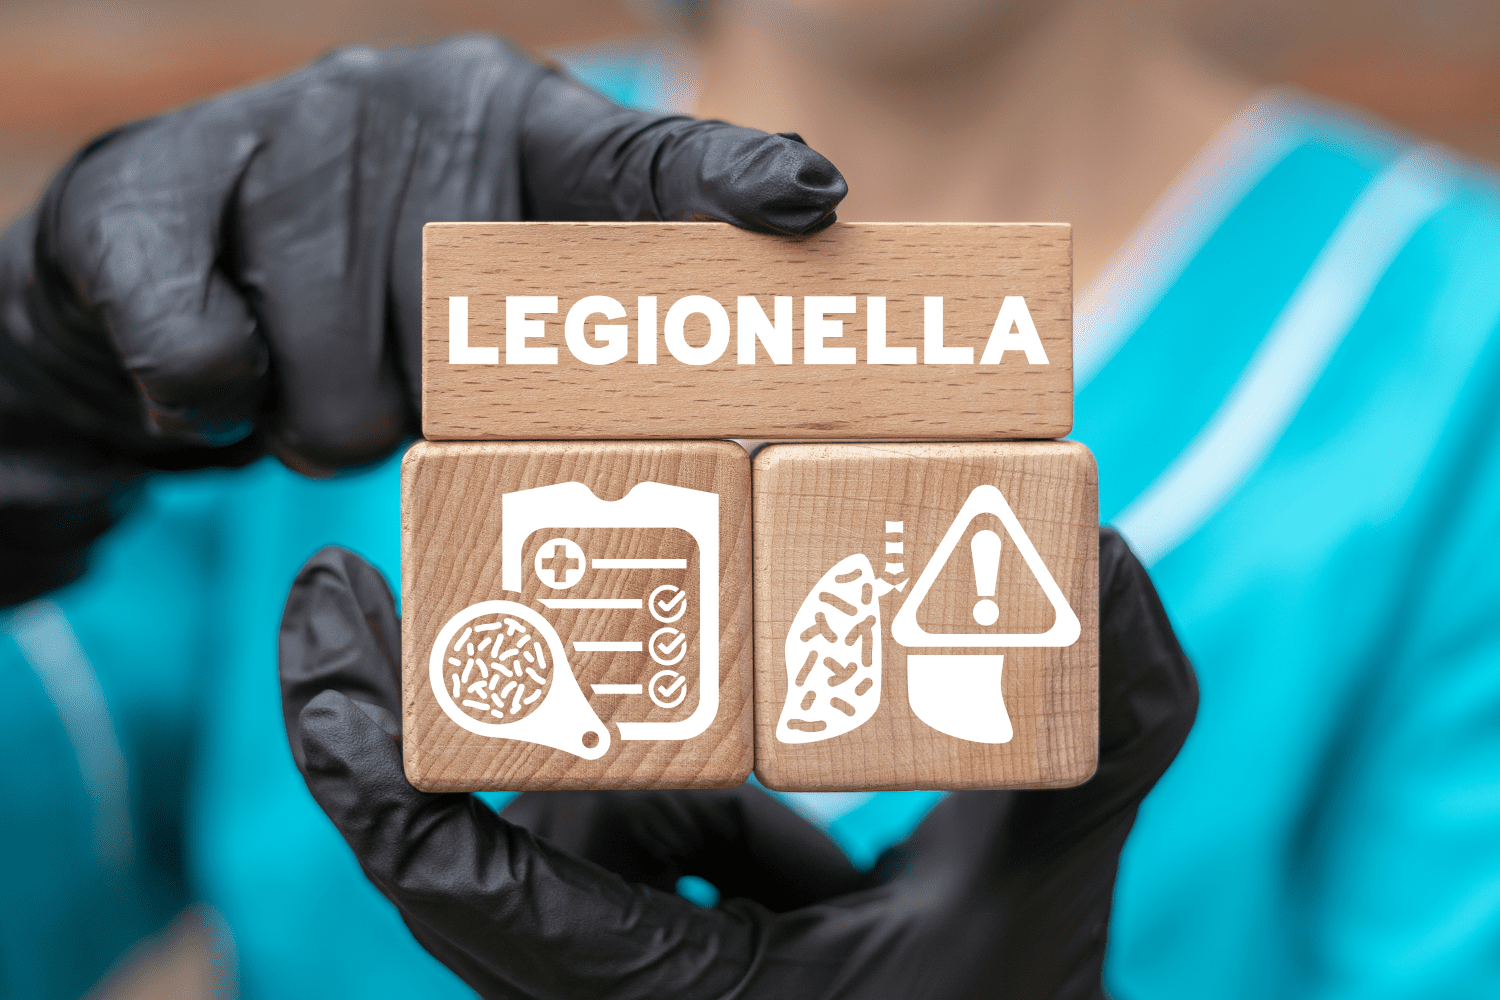 legionella water treatment testing